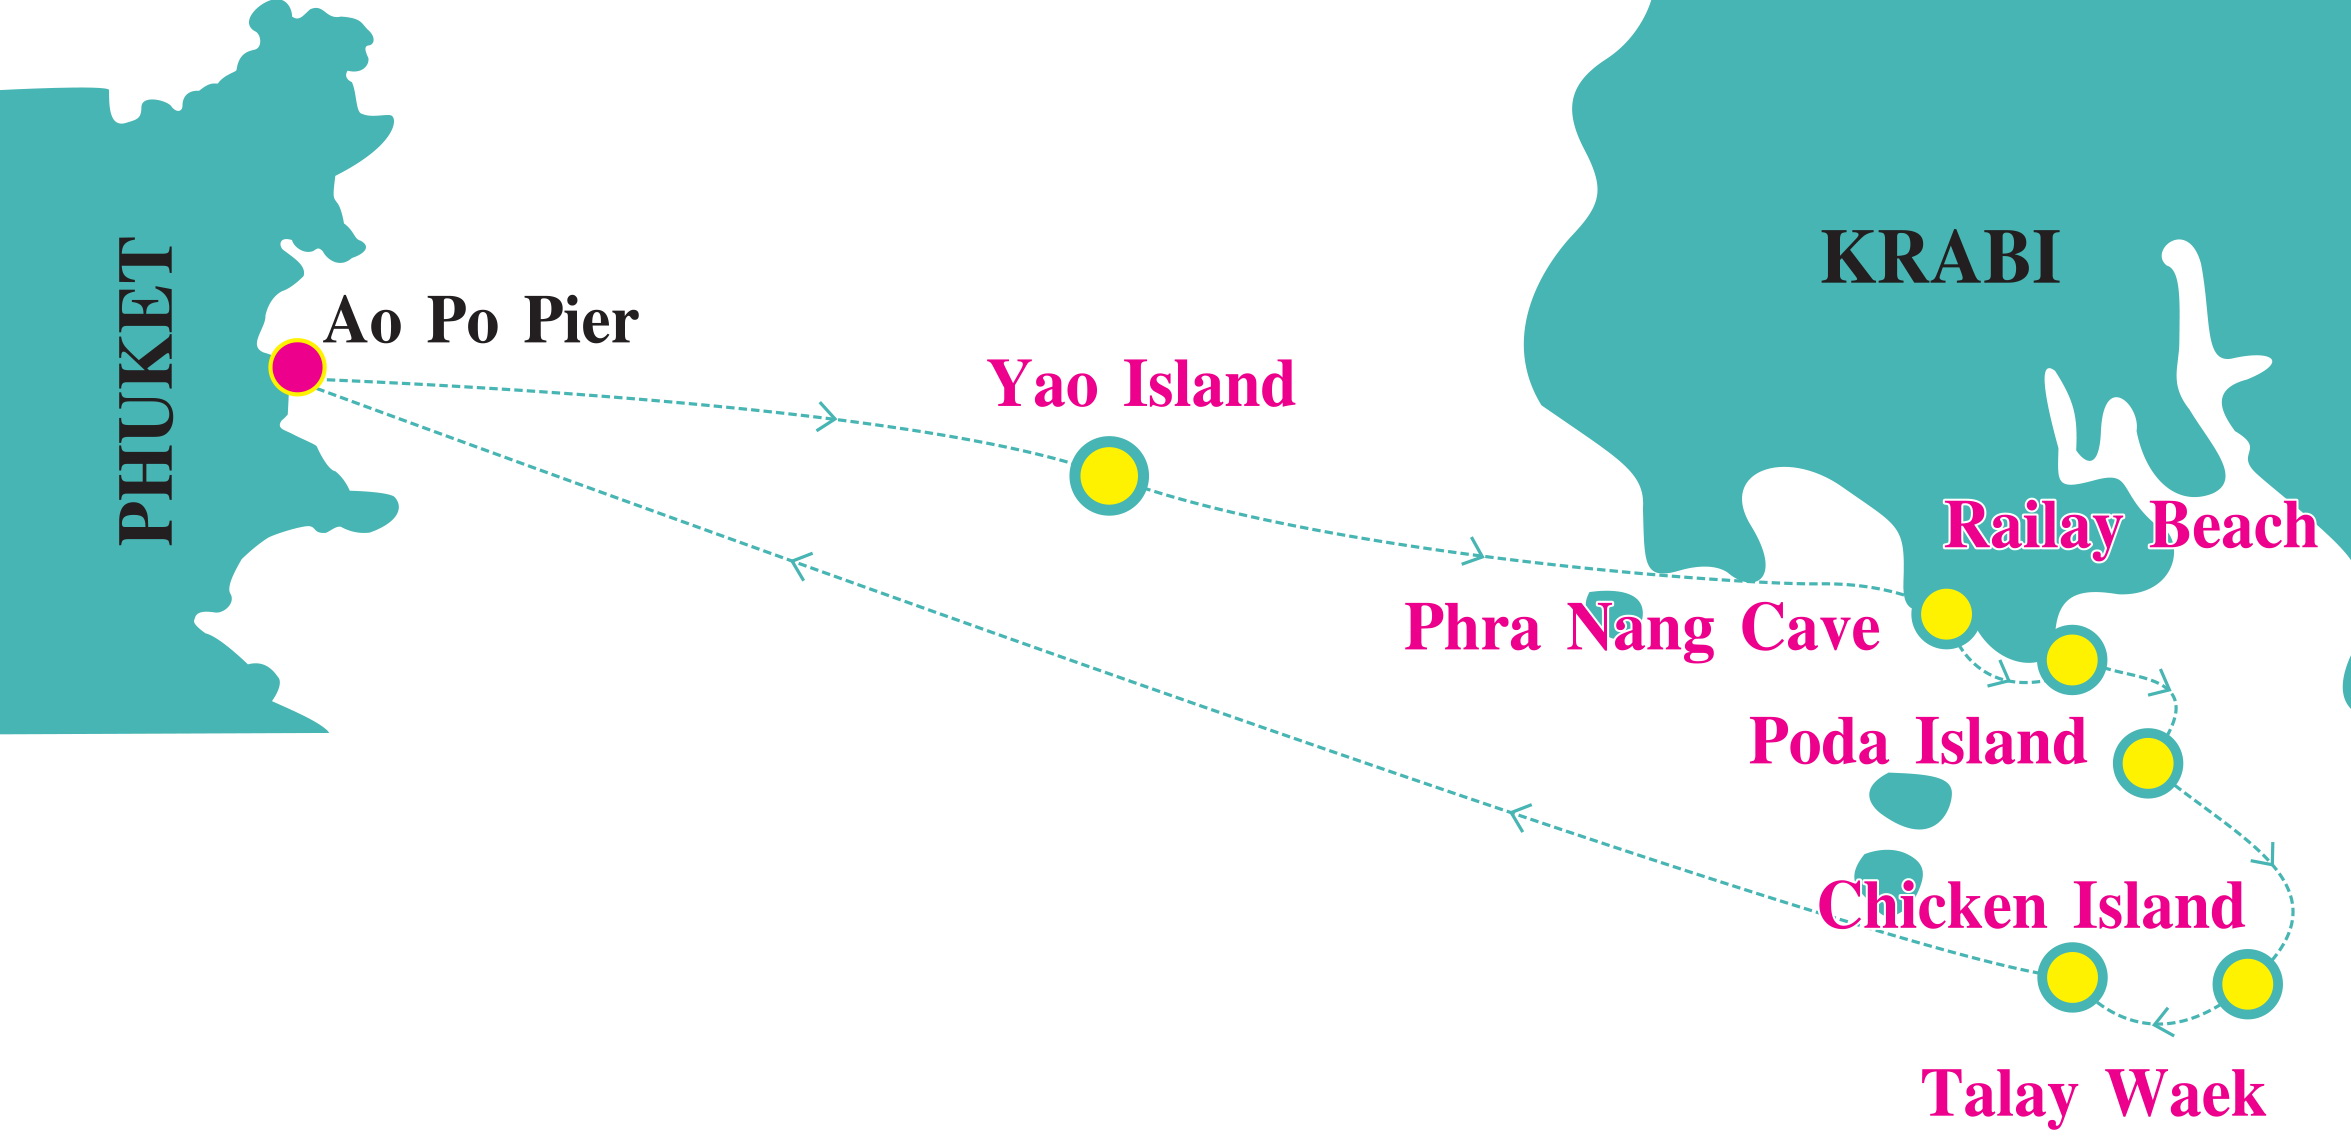 Krabi 5 Islands & Yao Island